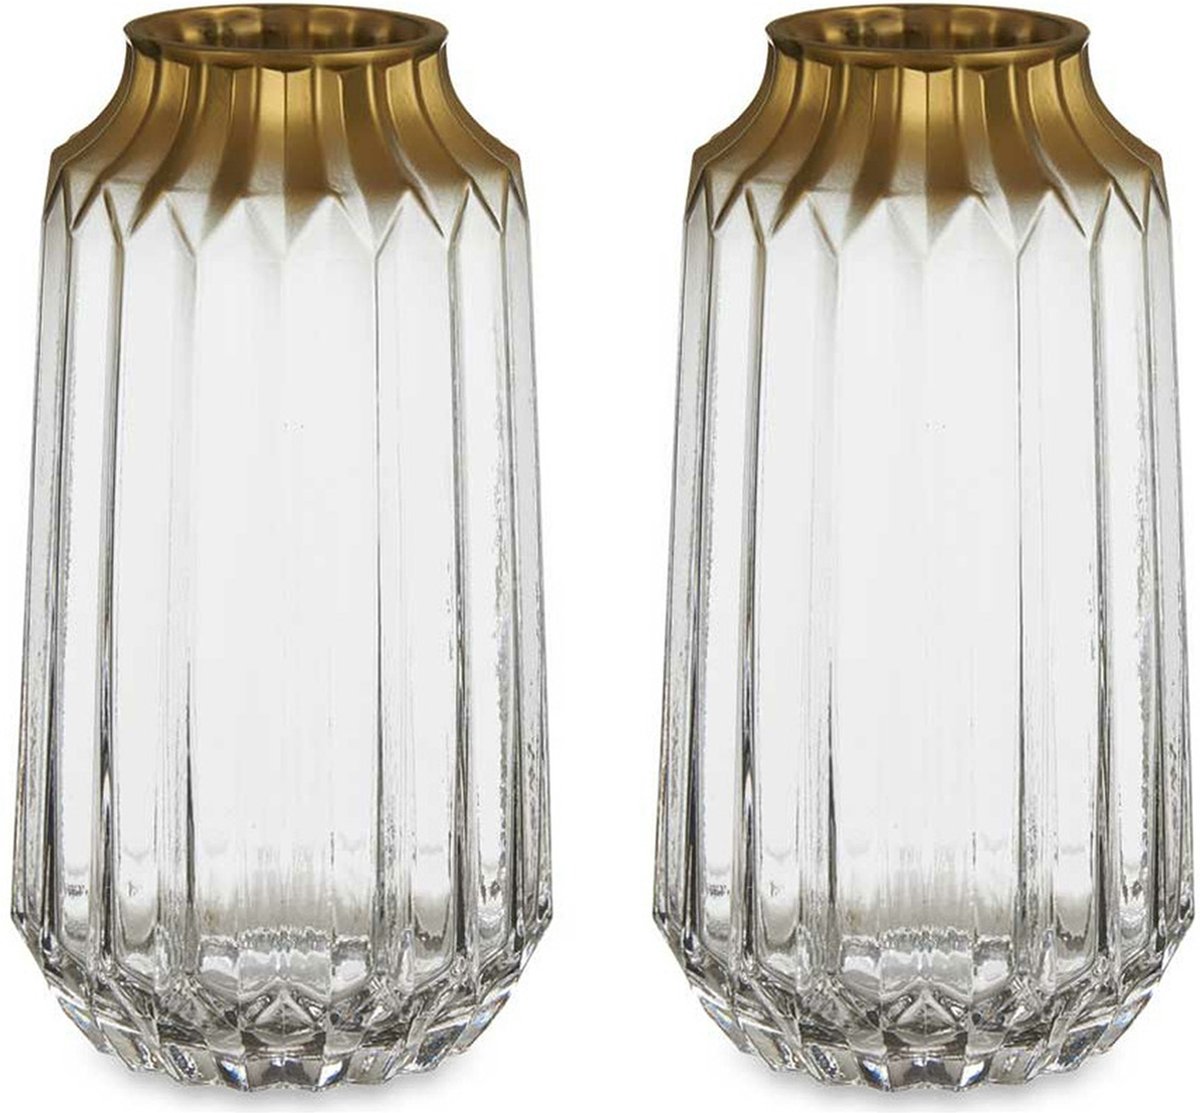 Giftdecor Bloemenvazen 2x Stuks - Luxe Decoratie Glas - Transparant/goud - 13 X 23 Cm - Vazen